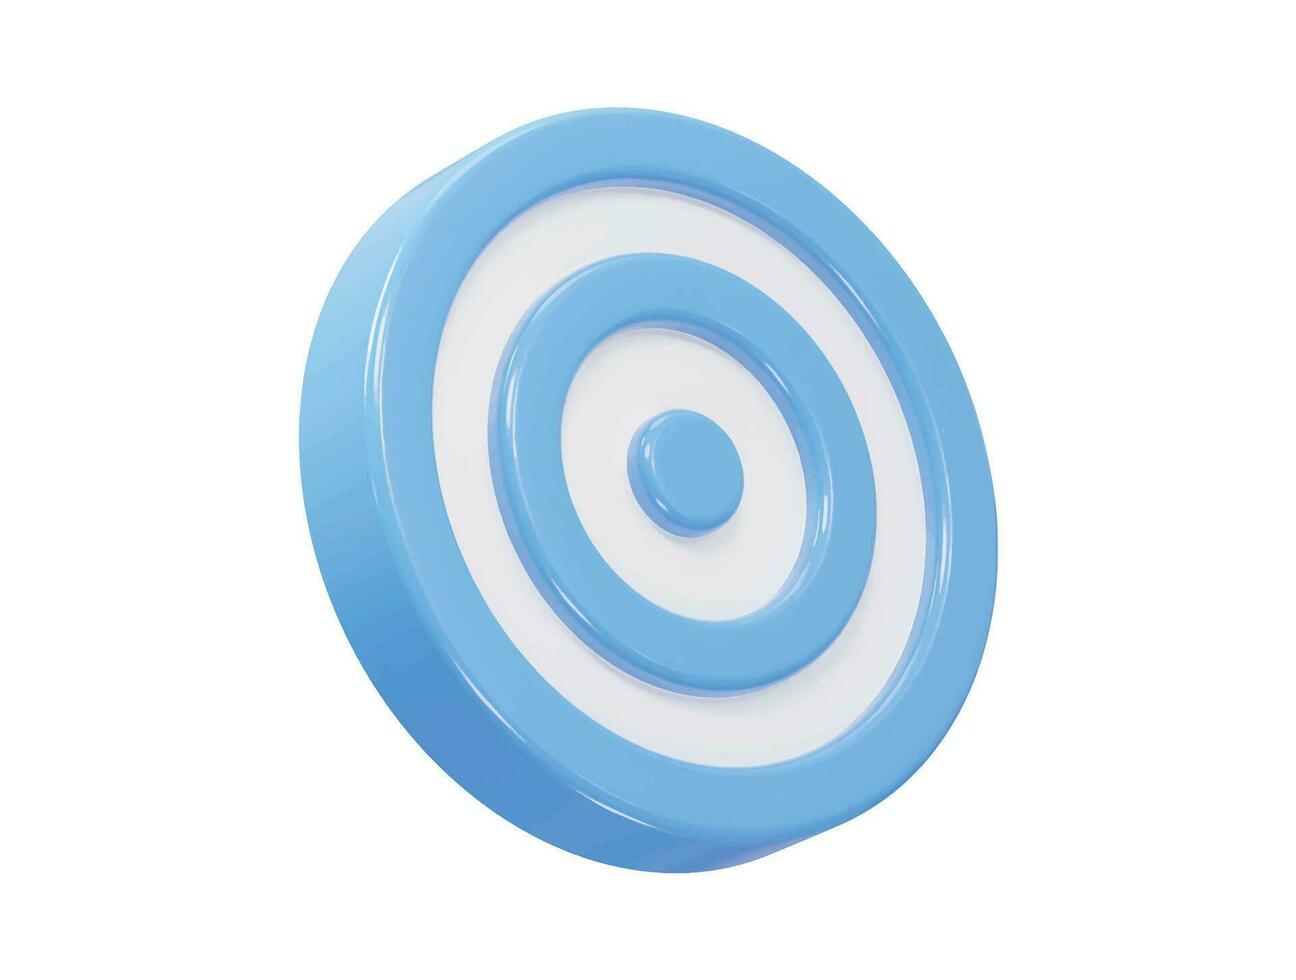 Target icon 3d rendering vector illustration